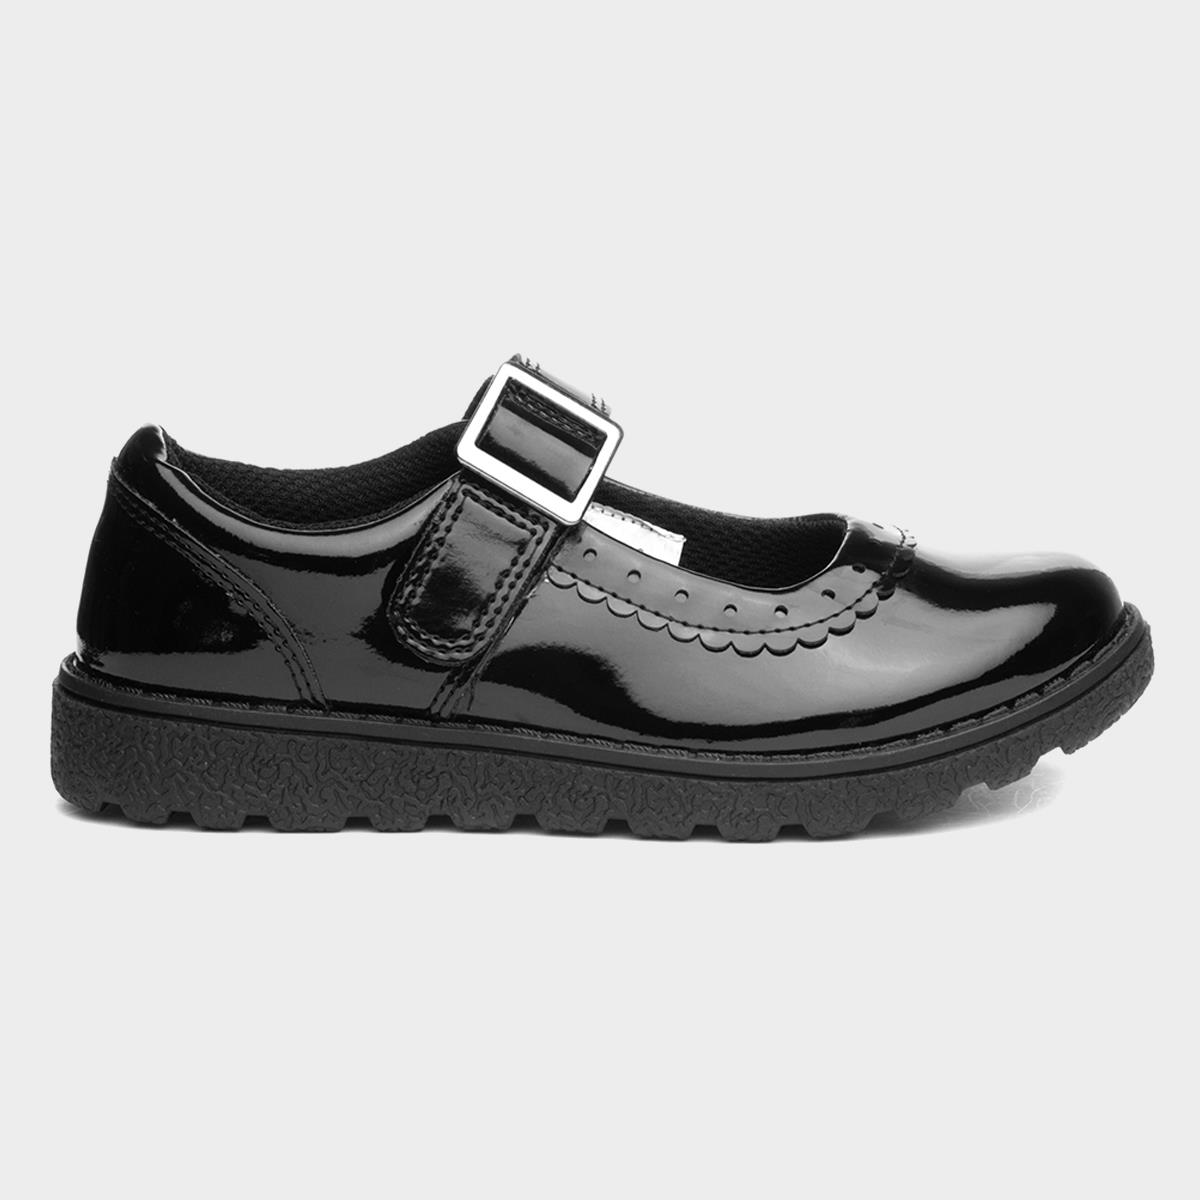 Buckle My Shoe Girls Patent Black Shoe 